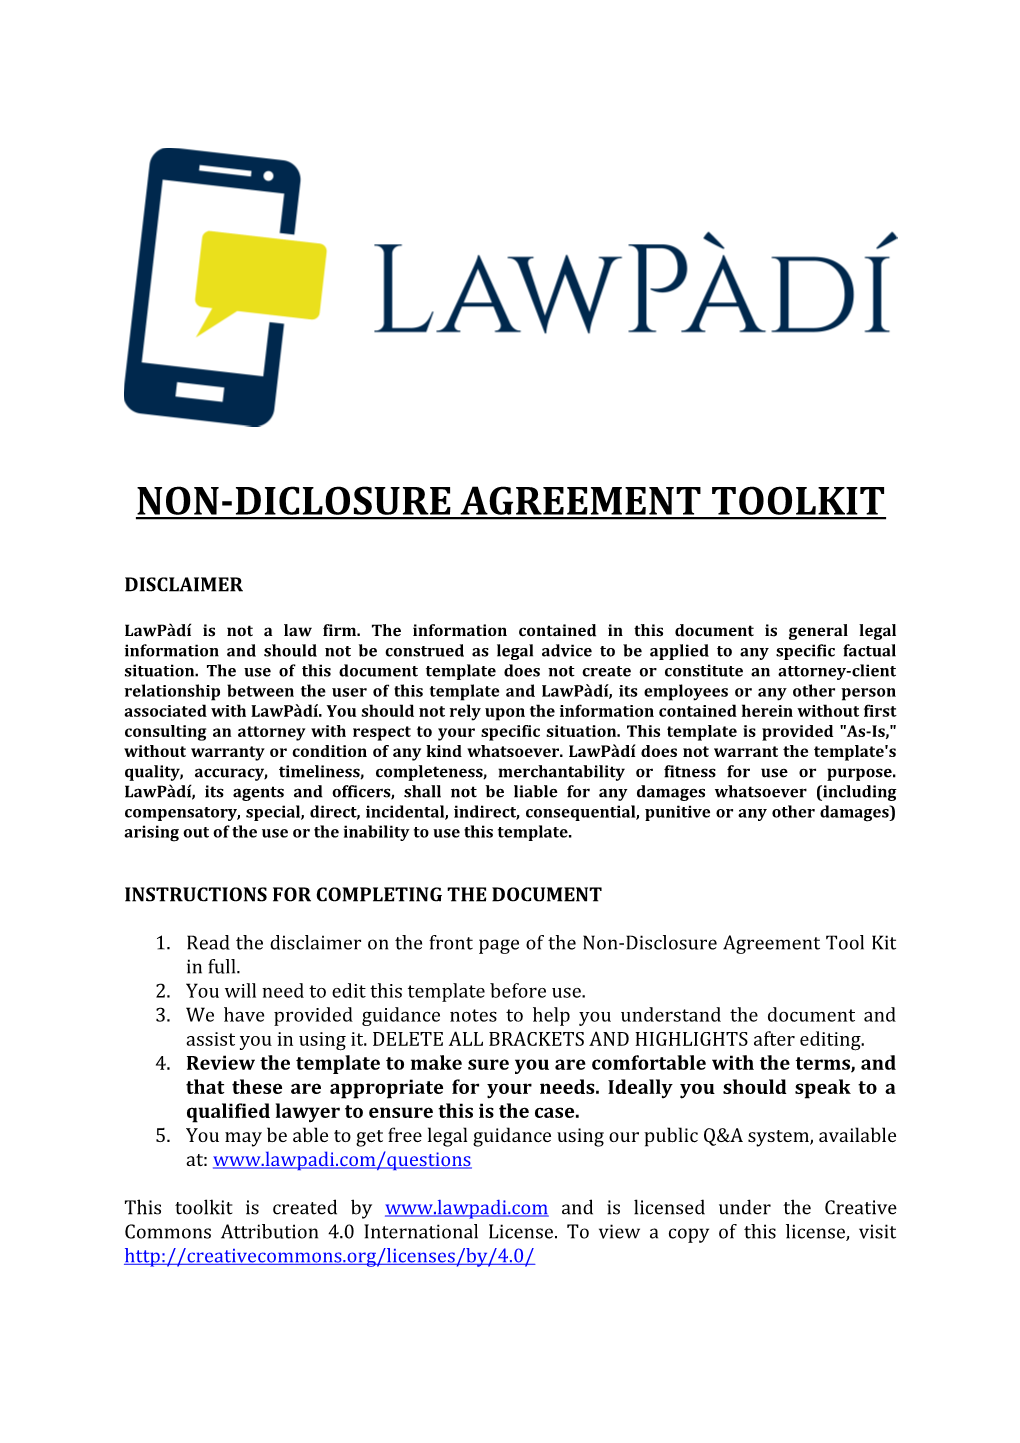 Non-Disclosure Agreement s9